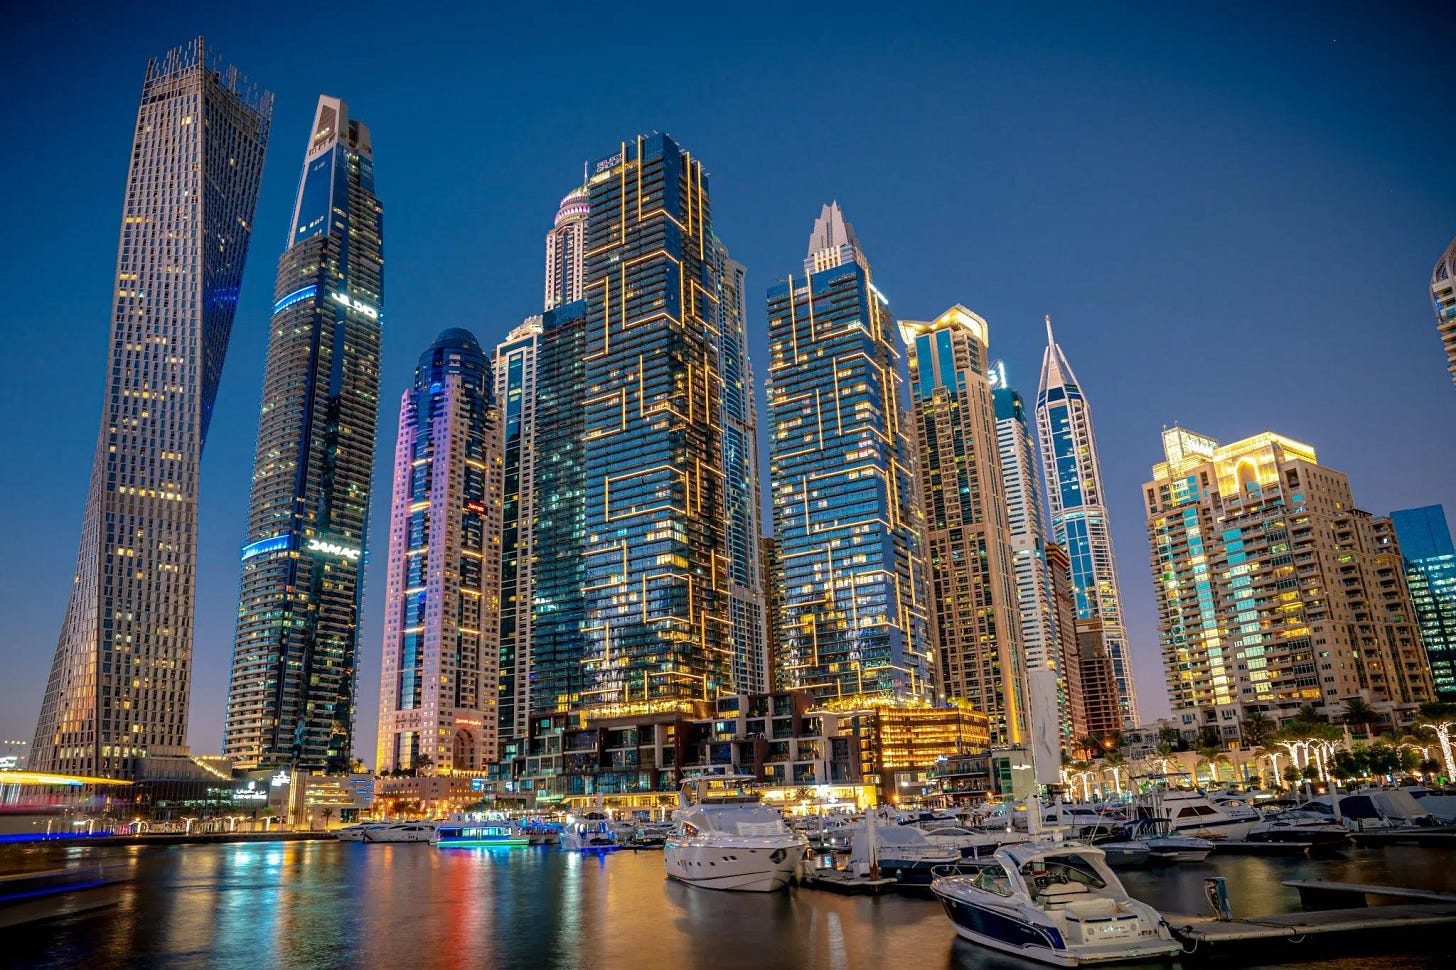 Dubai skyline. Image courtesy Dubai Media Office Twitter handle.